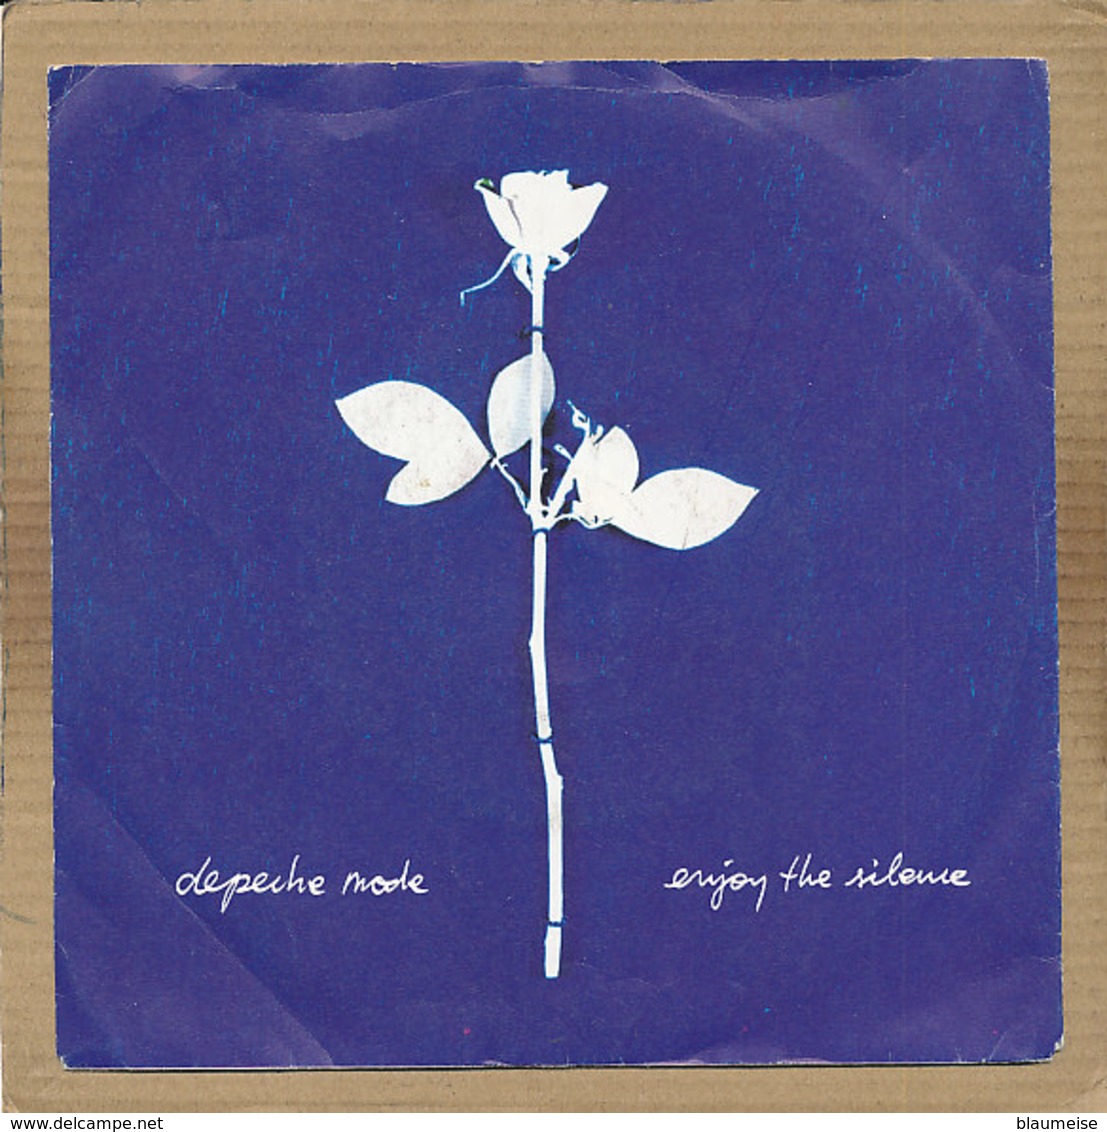 7" Single, Depeche Mode - Enjoy The Silence - Disco, Pop